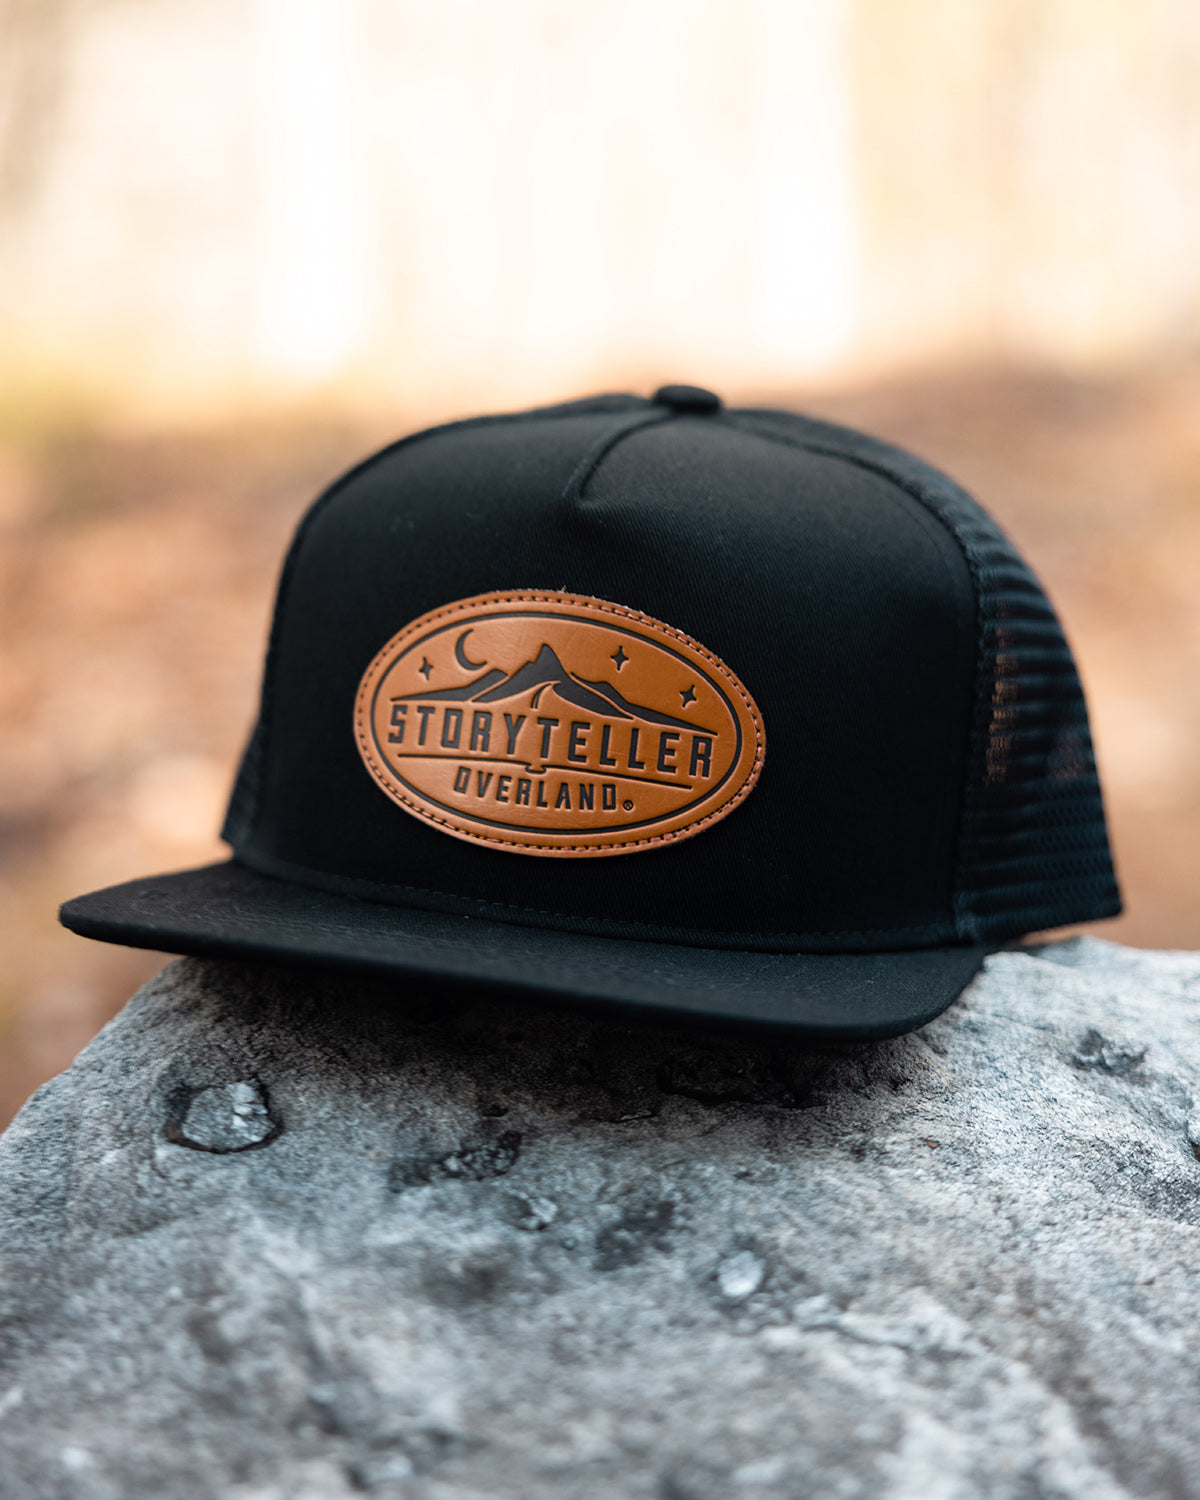 neverthirst Leather Co. Black Hat